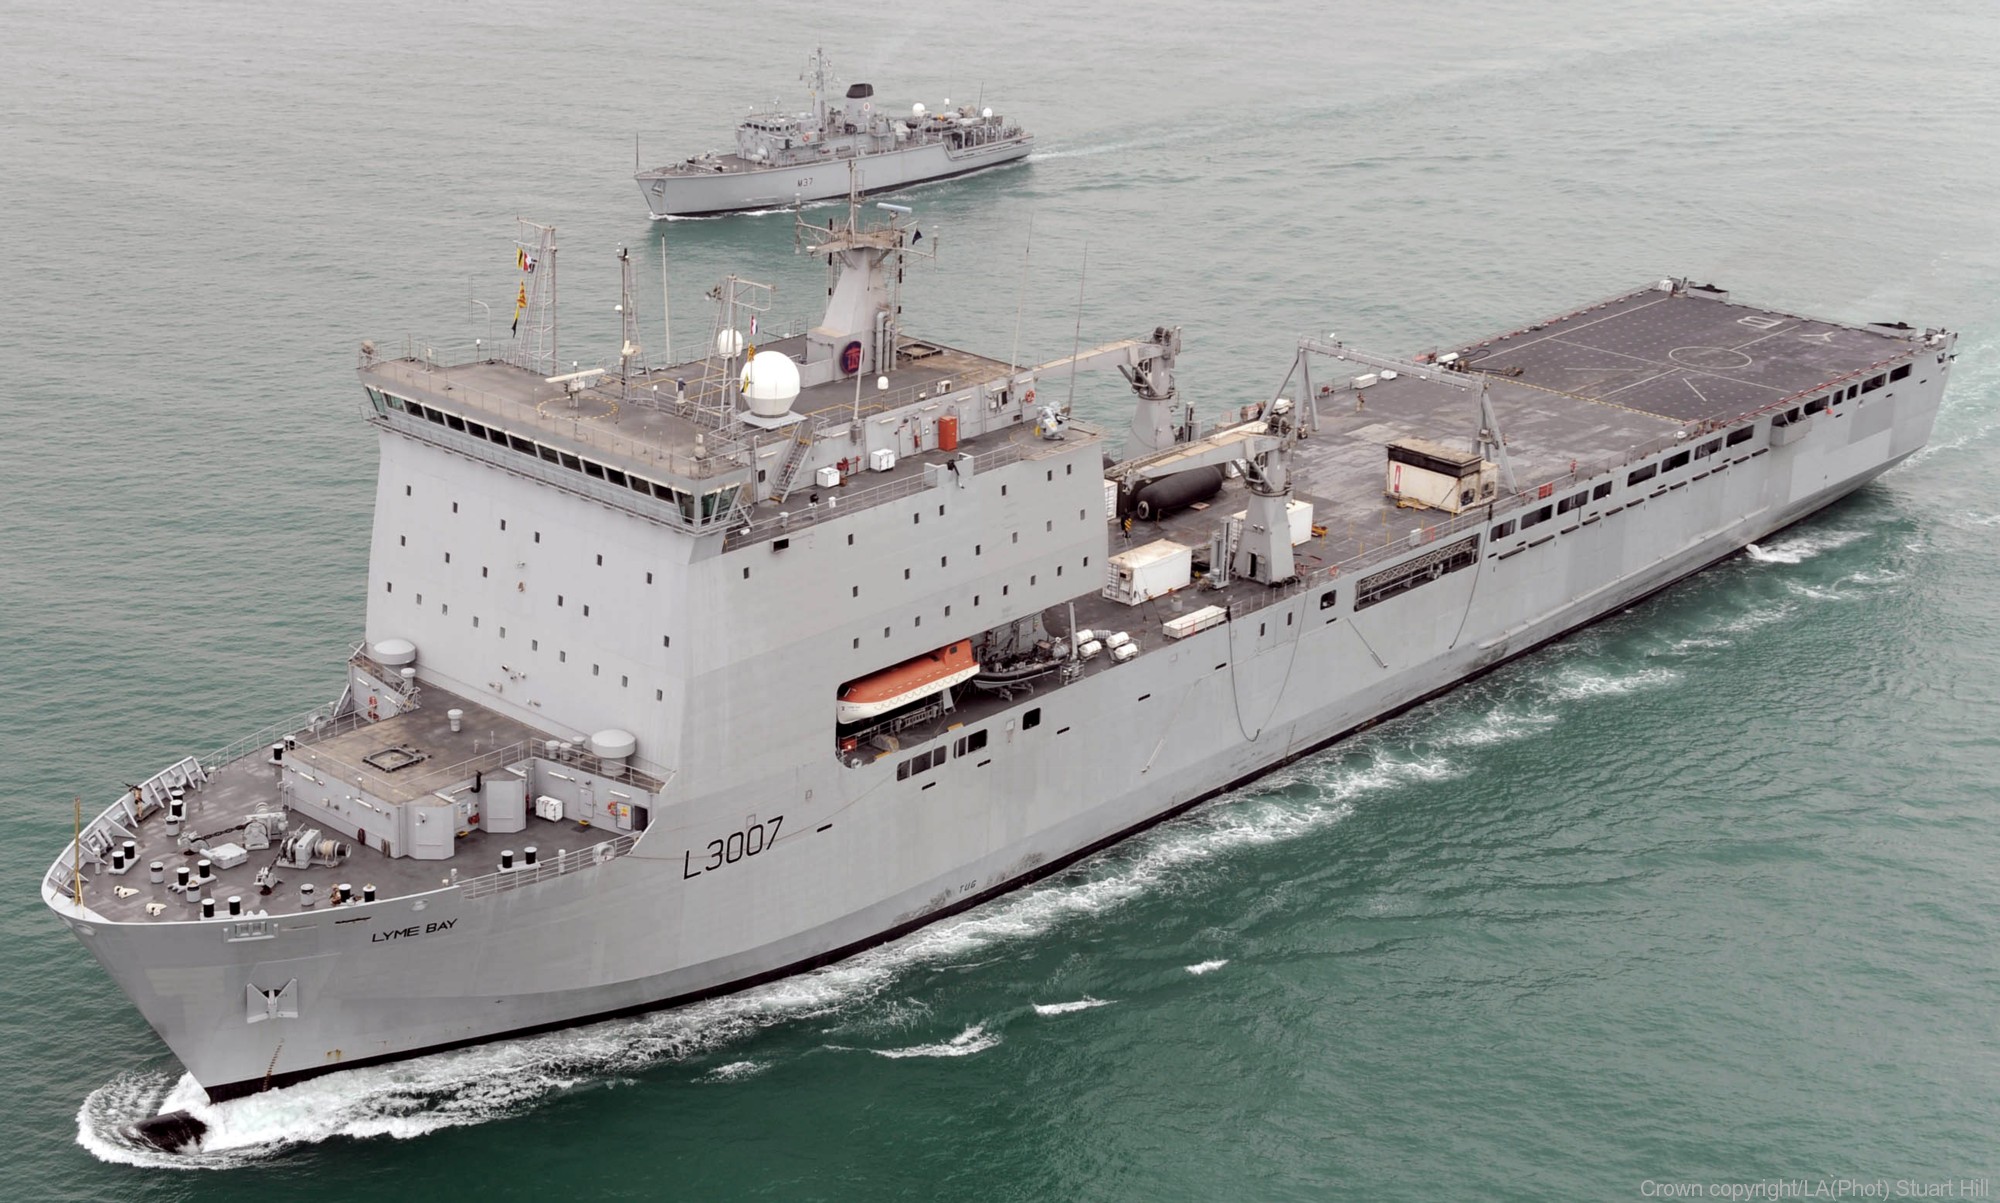 rfa lyme bay l-3007 class dock landing ship lsd amphibious royal fleet auxilary navy